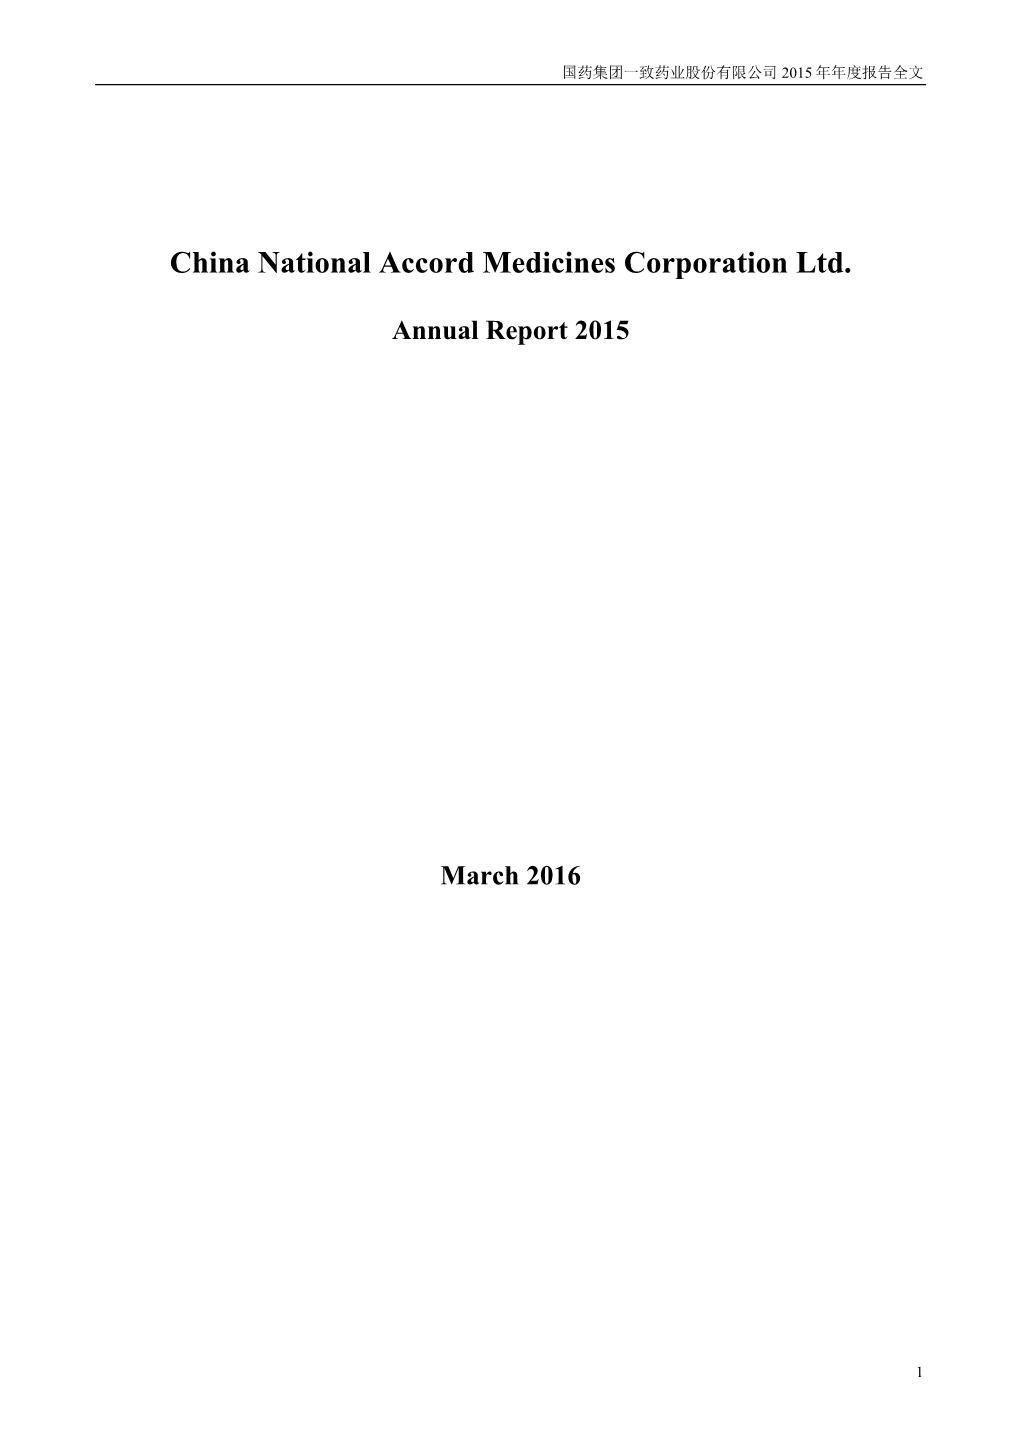 China National Accord Medicines Corporation Ltd